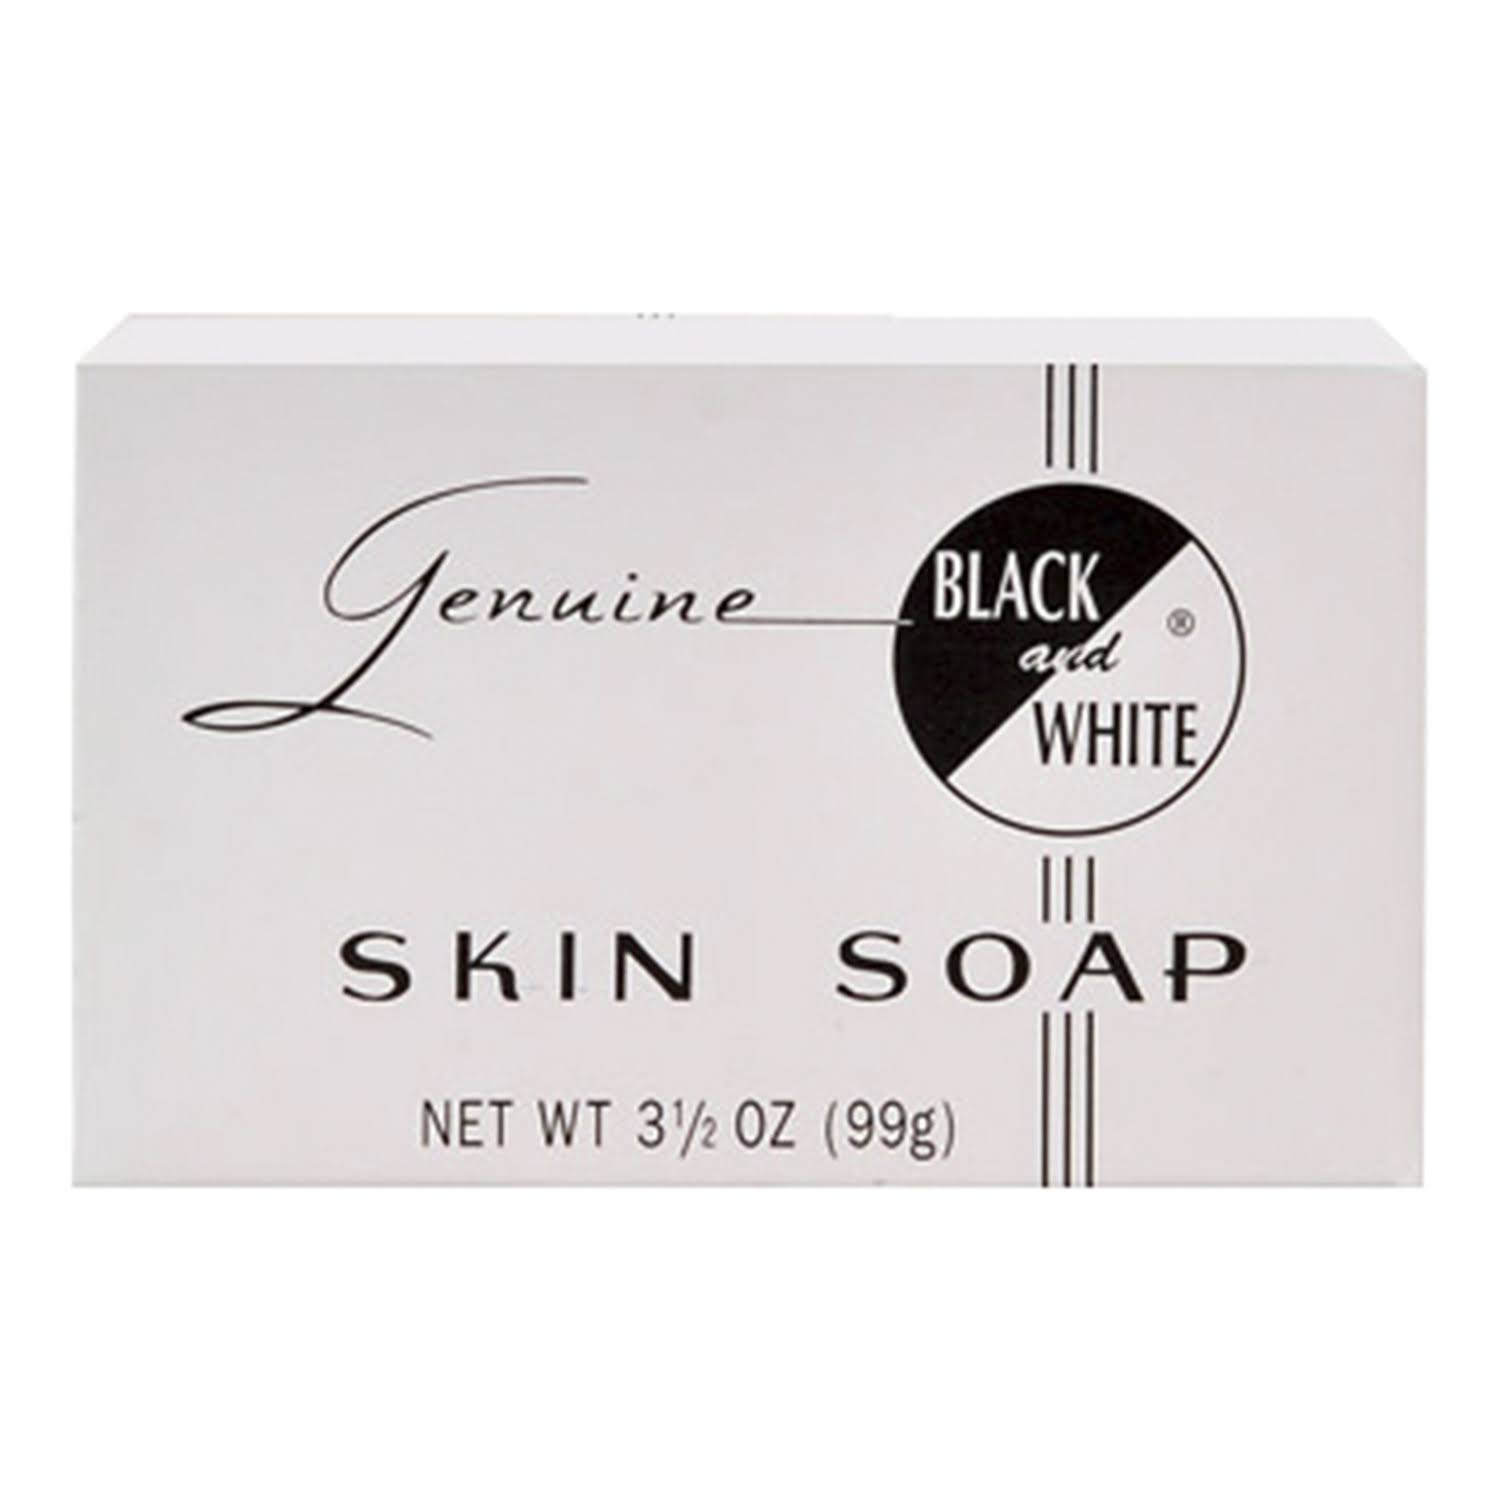 Black and White Skin Soap Bar - 3.5oz